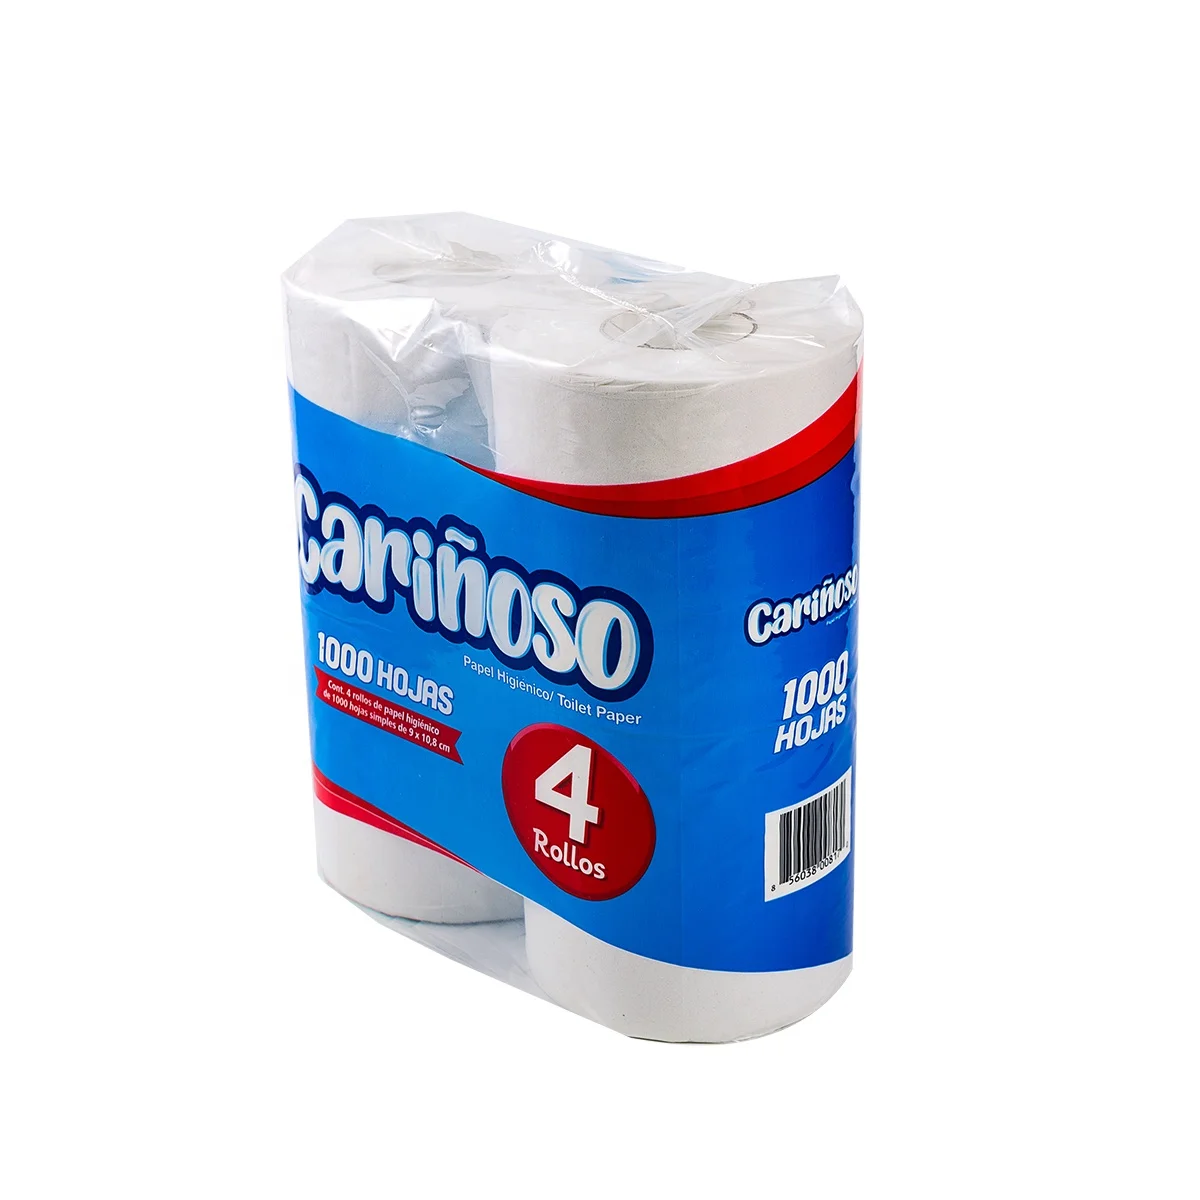 

Hot selling papel higienico, White or customized